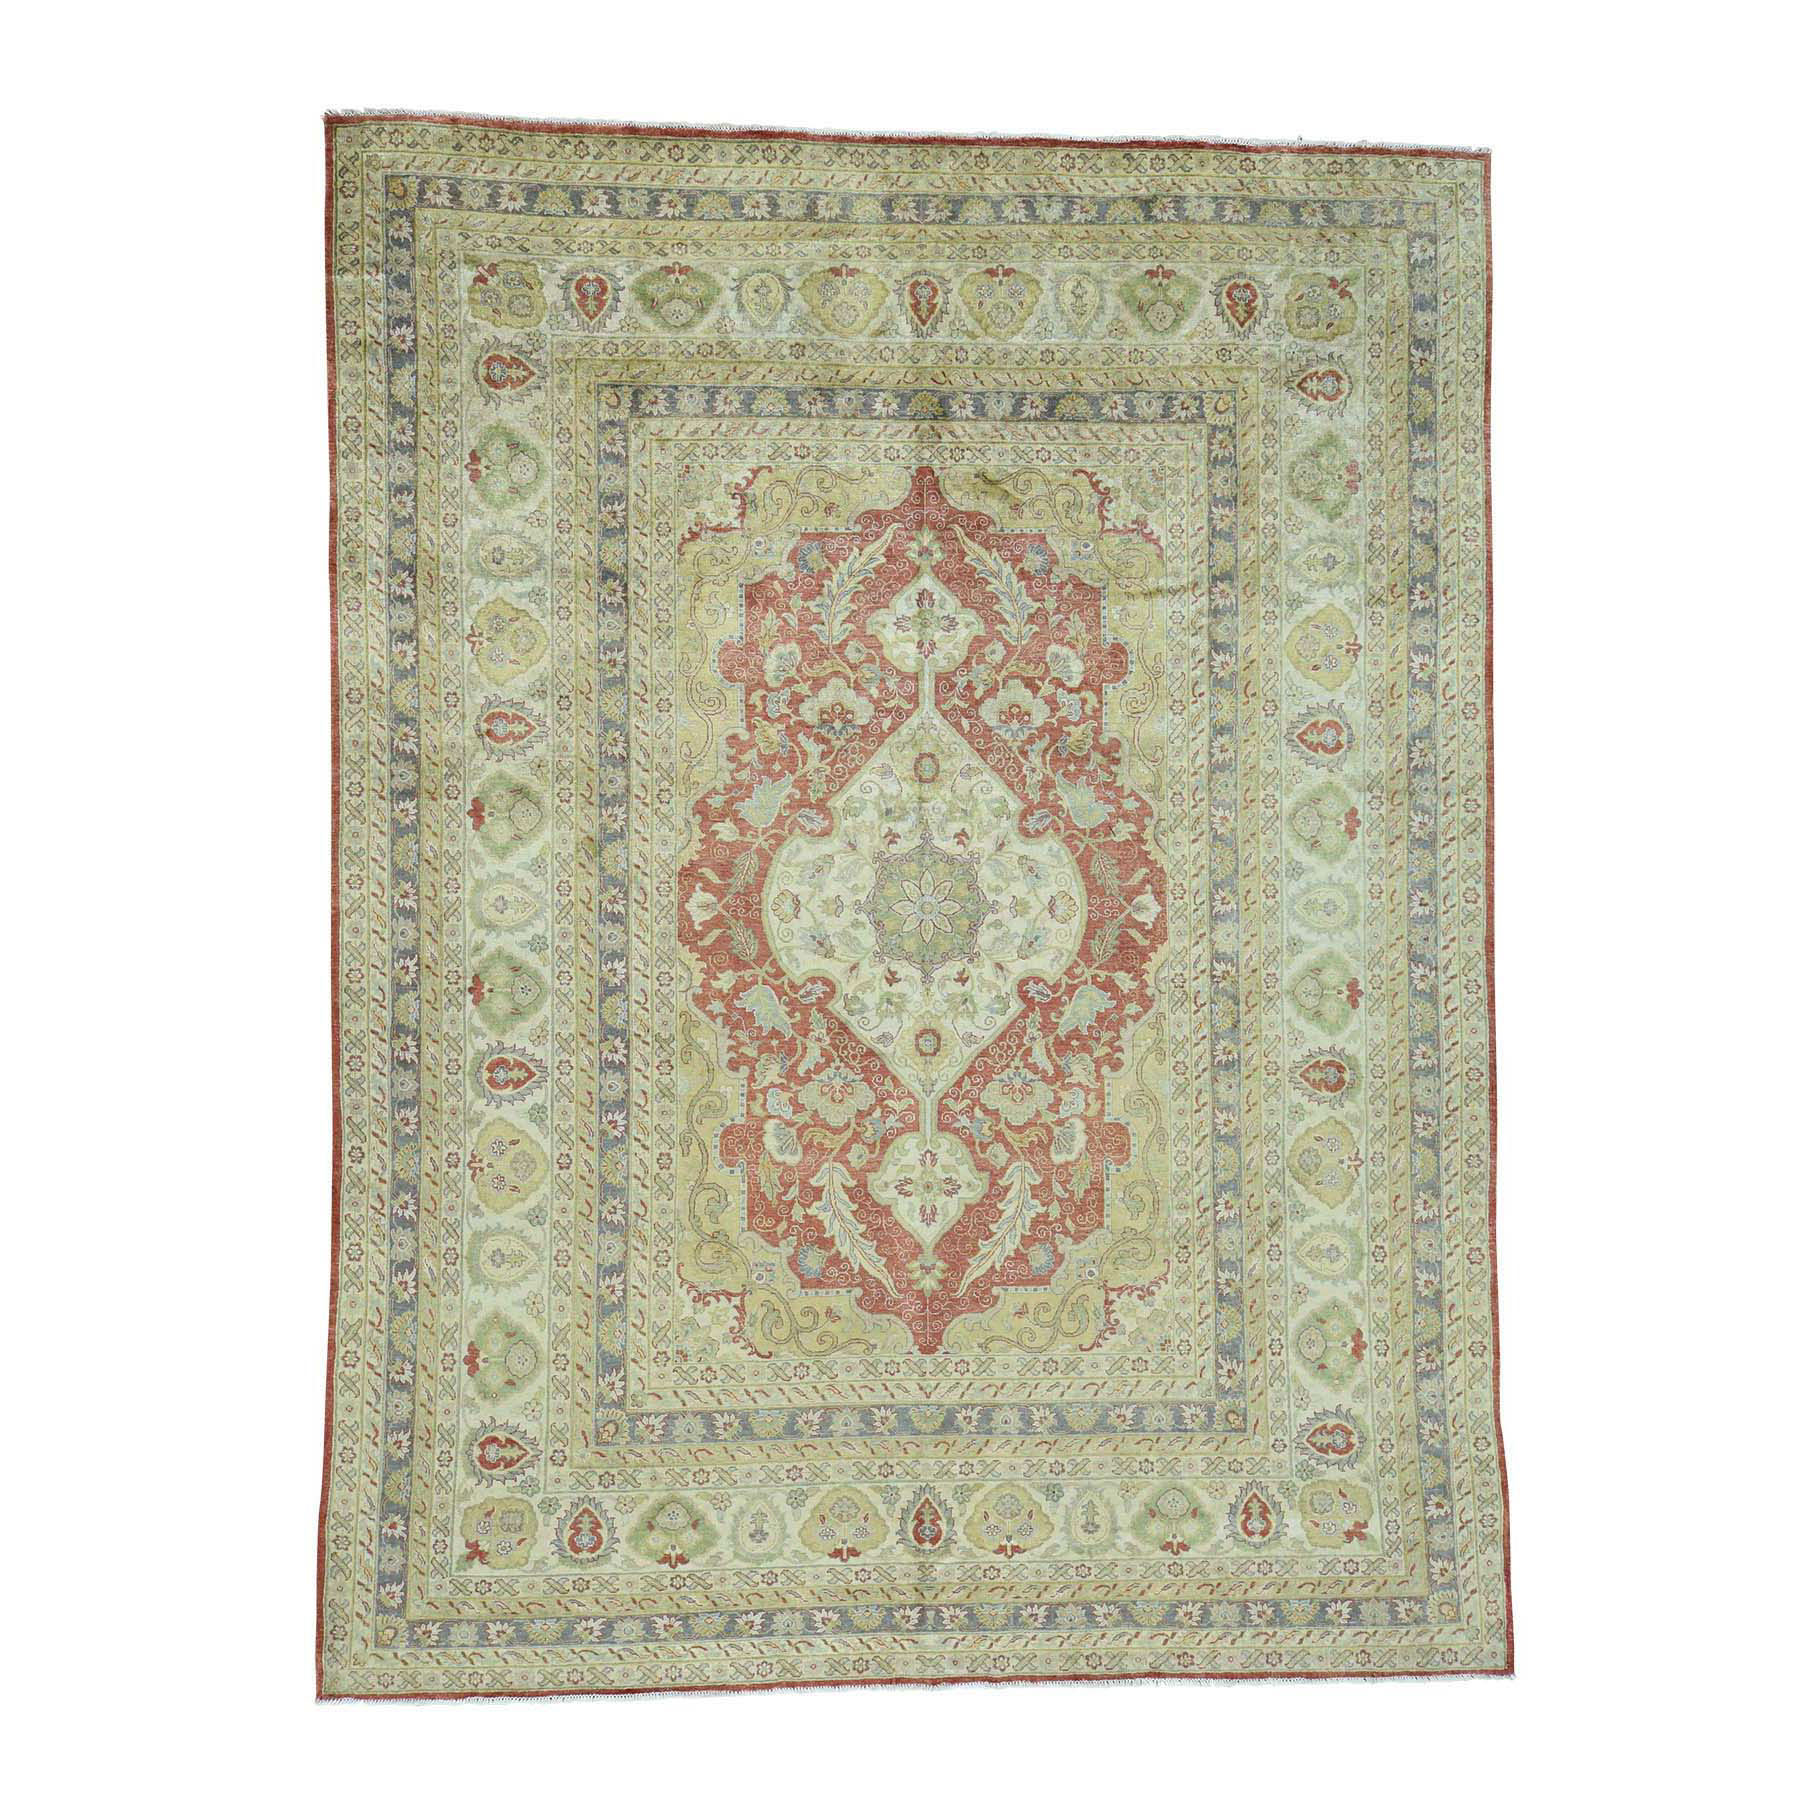 9'x11'9" Pure Silk Antiqued Ottoman Design Hand Woven Oriental Rug 